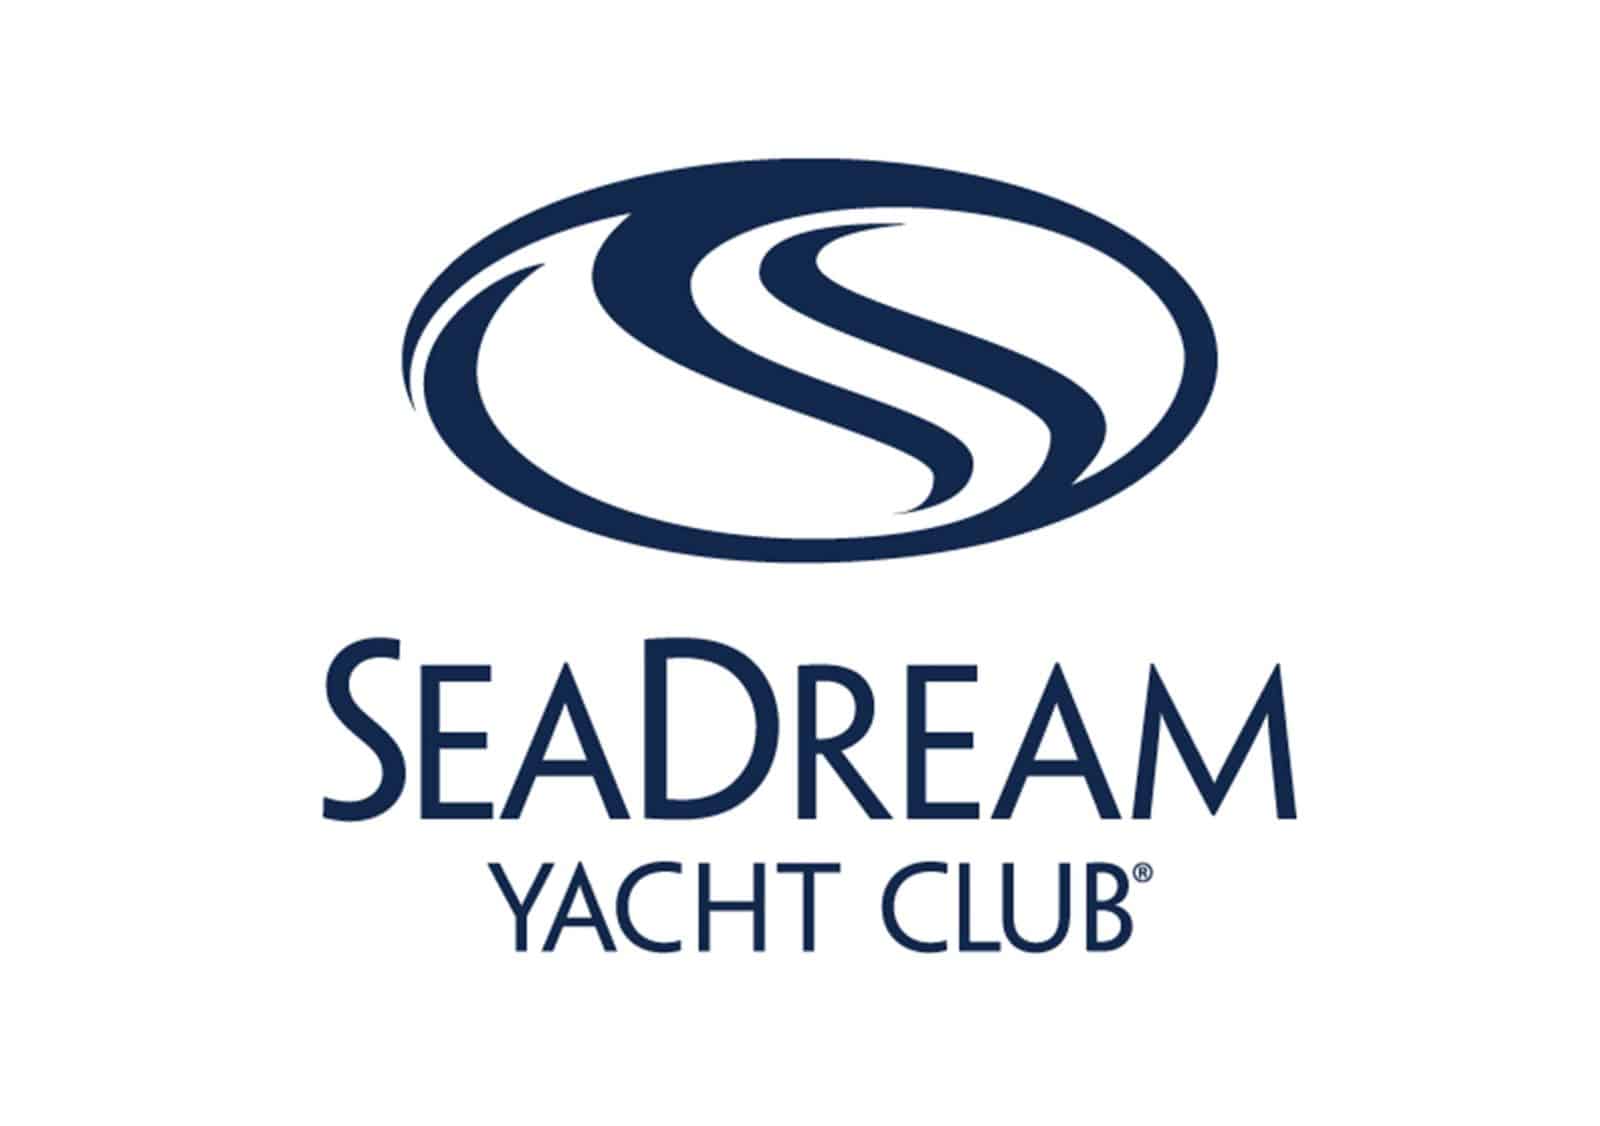 SeaDream logo